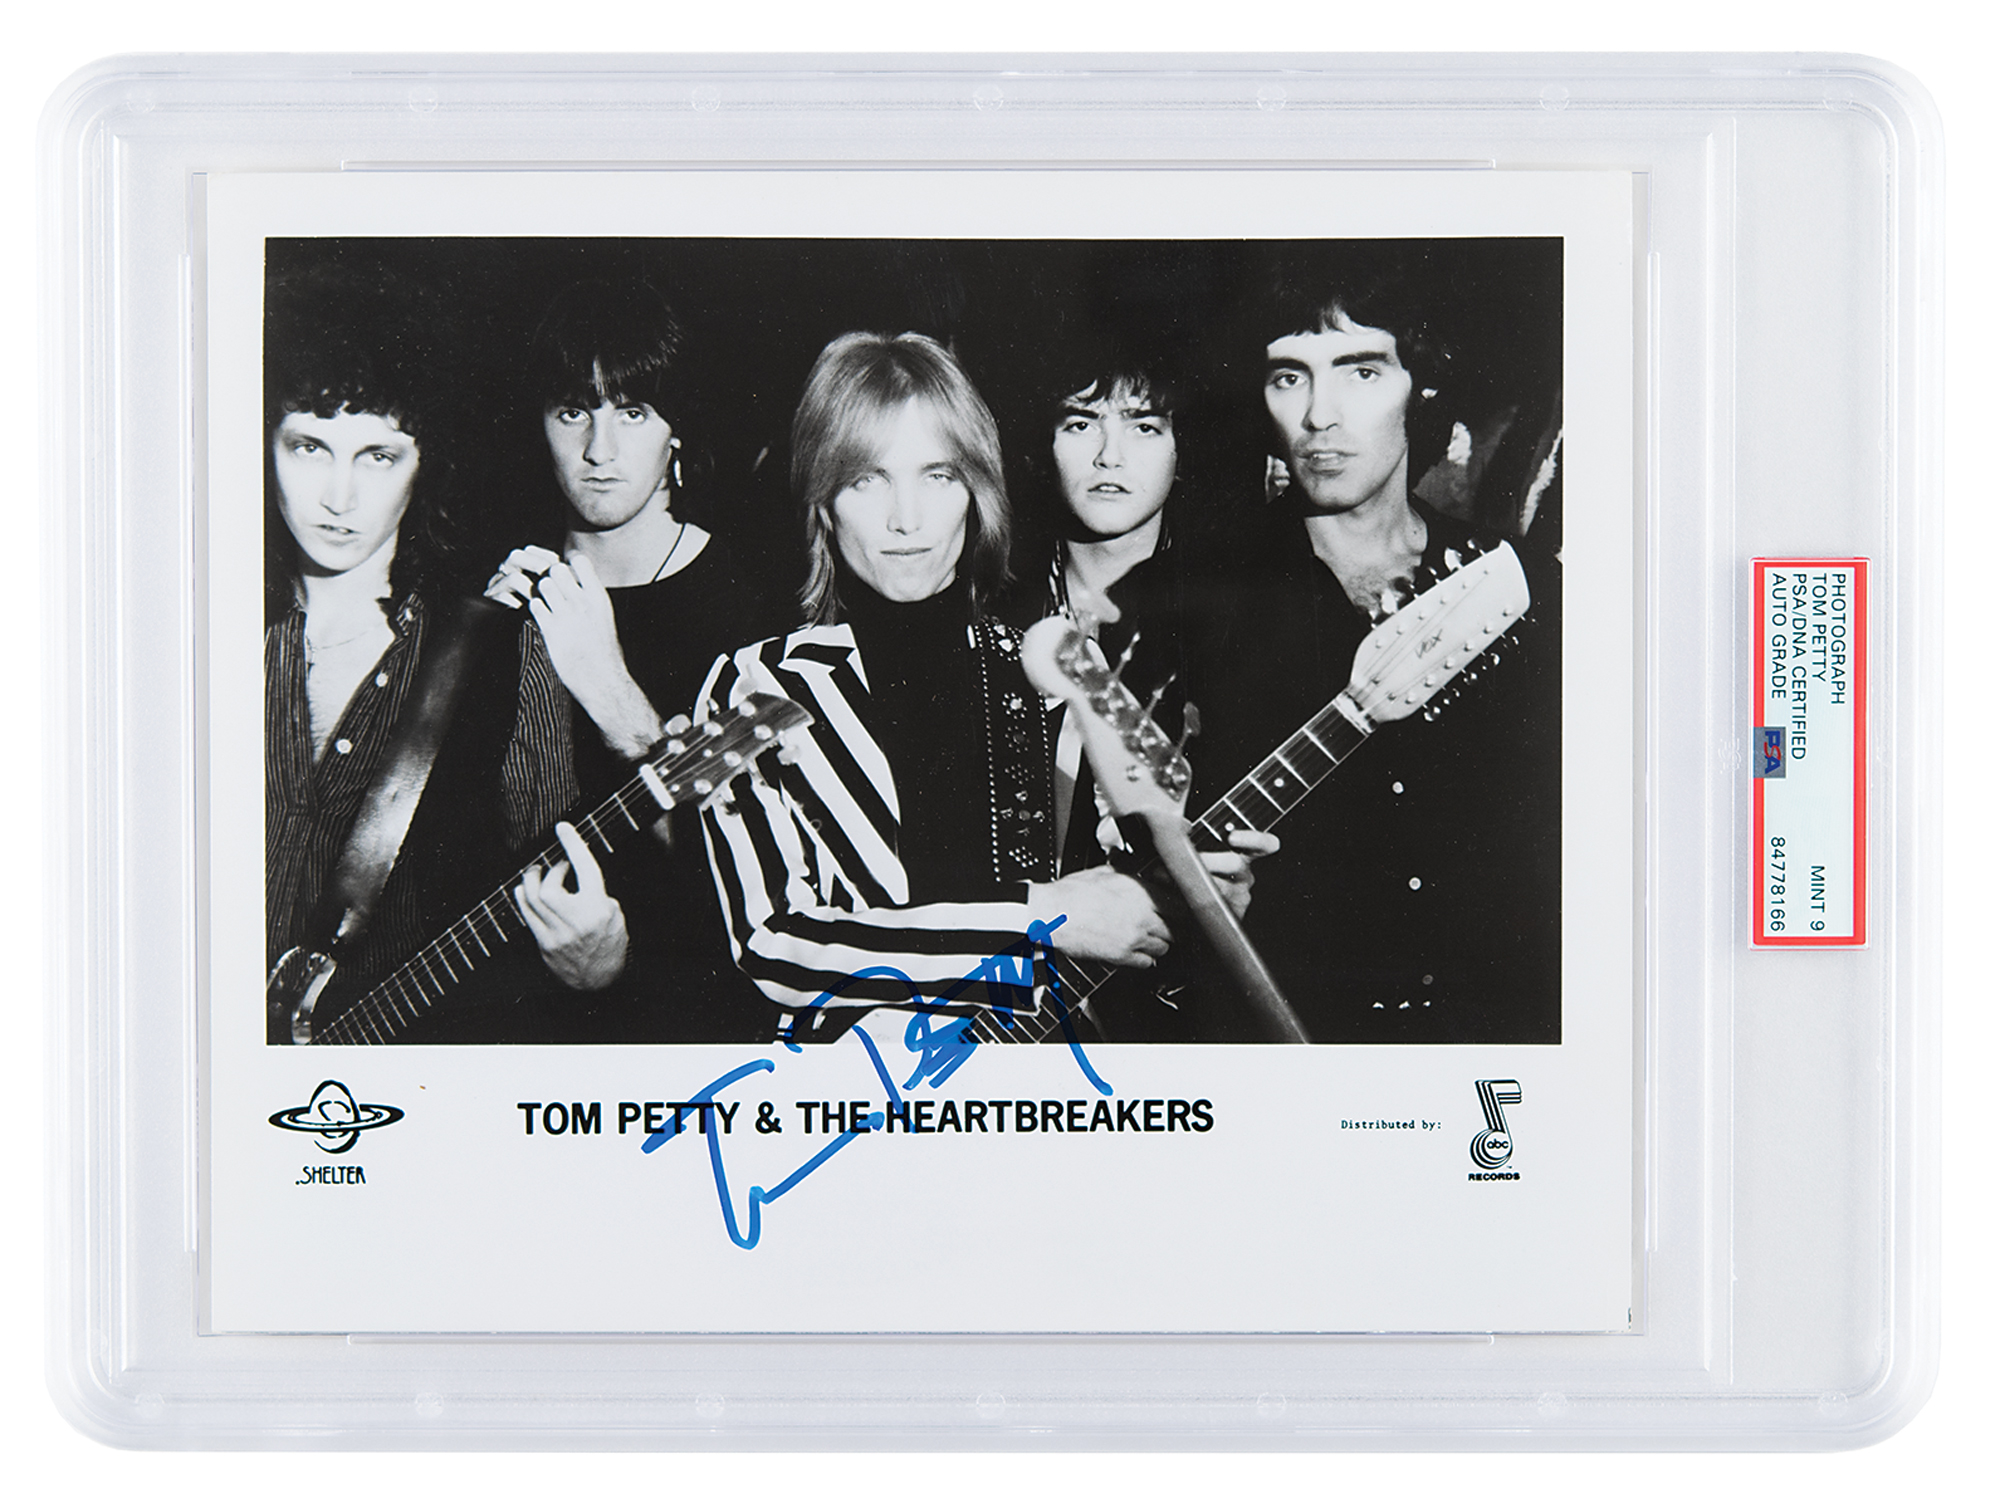 Lot #7349 Tom Petty Signed Photograph - PSA MINT 9